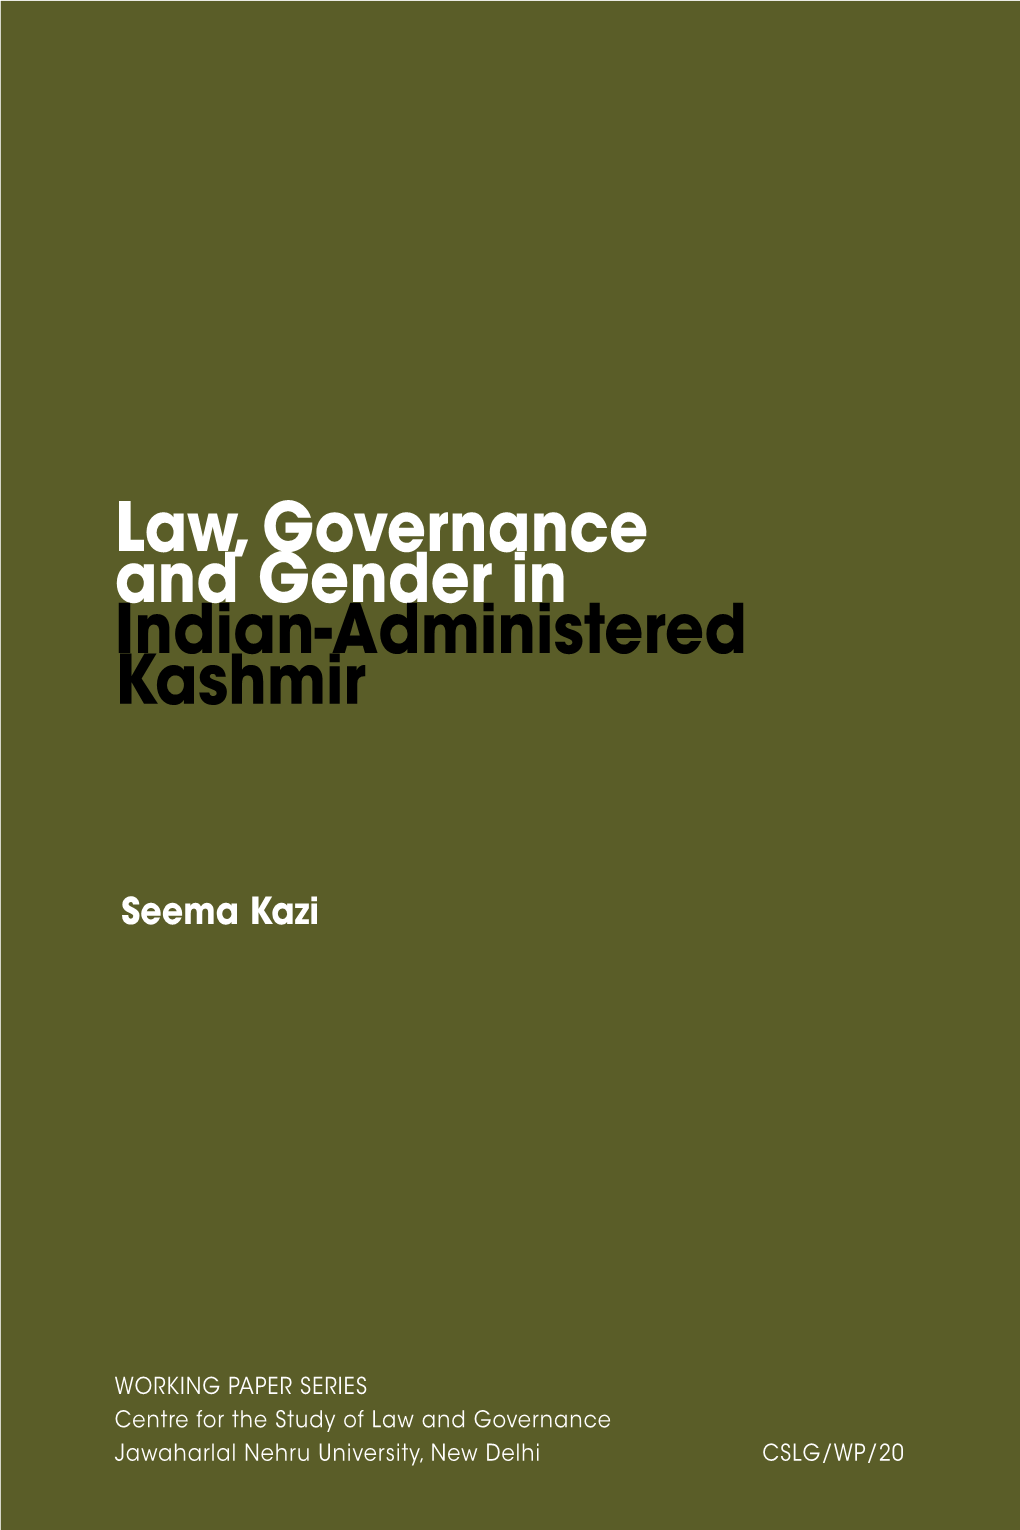 Law, Governance and Gender in Indian-Administered Kashmir